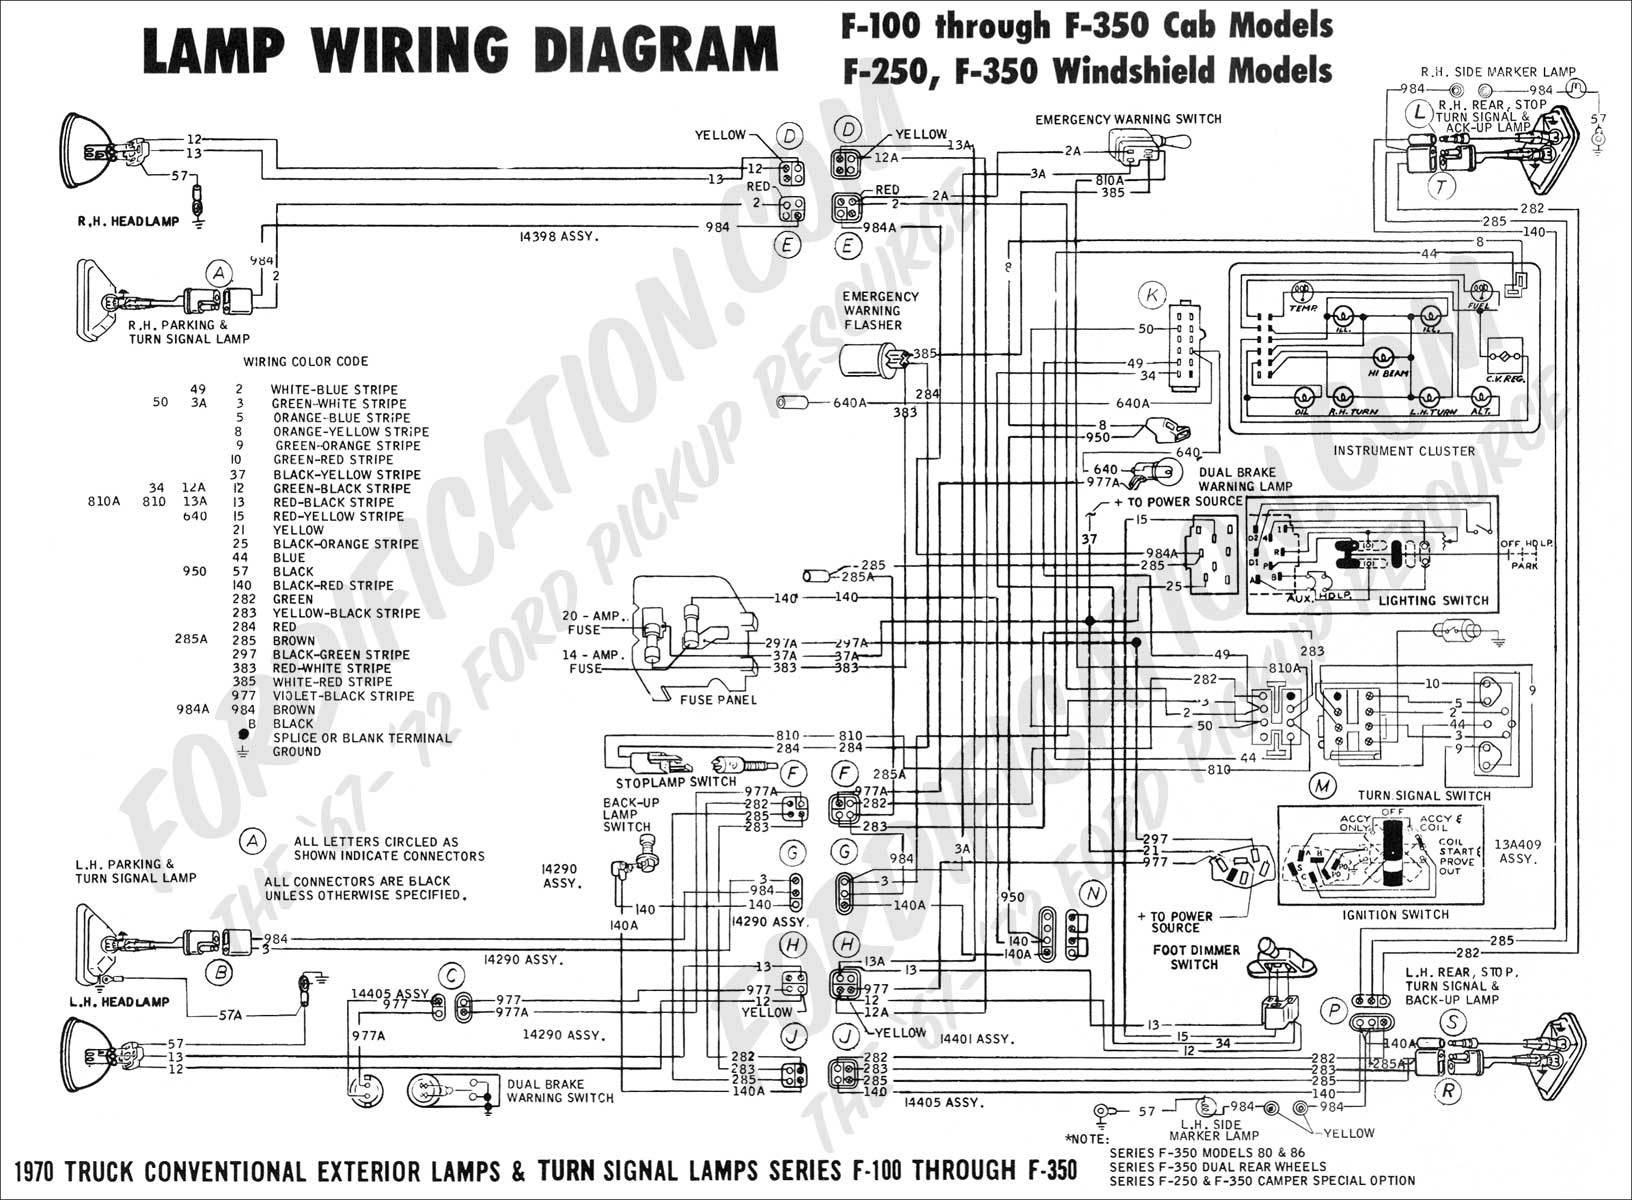 Ford Trailer Plug Wiring Diagram Trailer to ford F350 Wiring Diagram Wiring Diagram Of Ford Trailer Plug Wiring Diagram